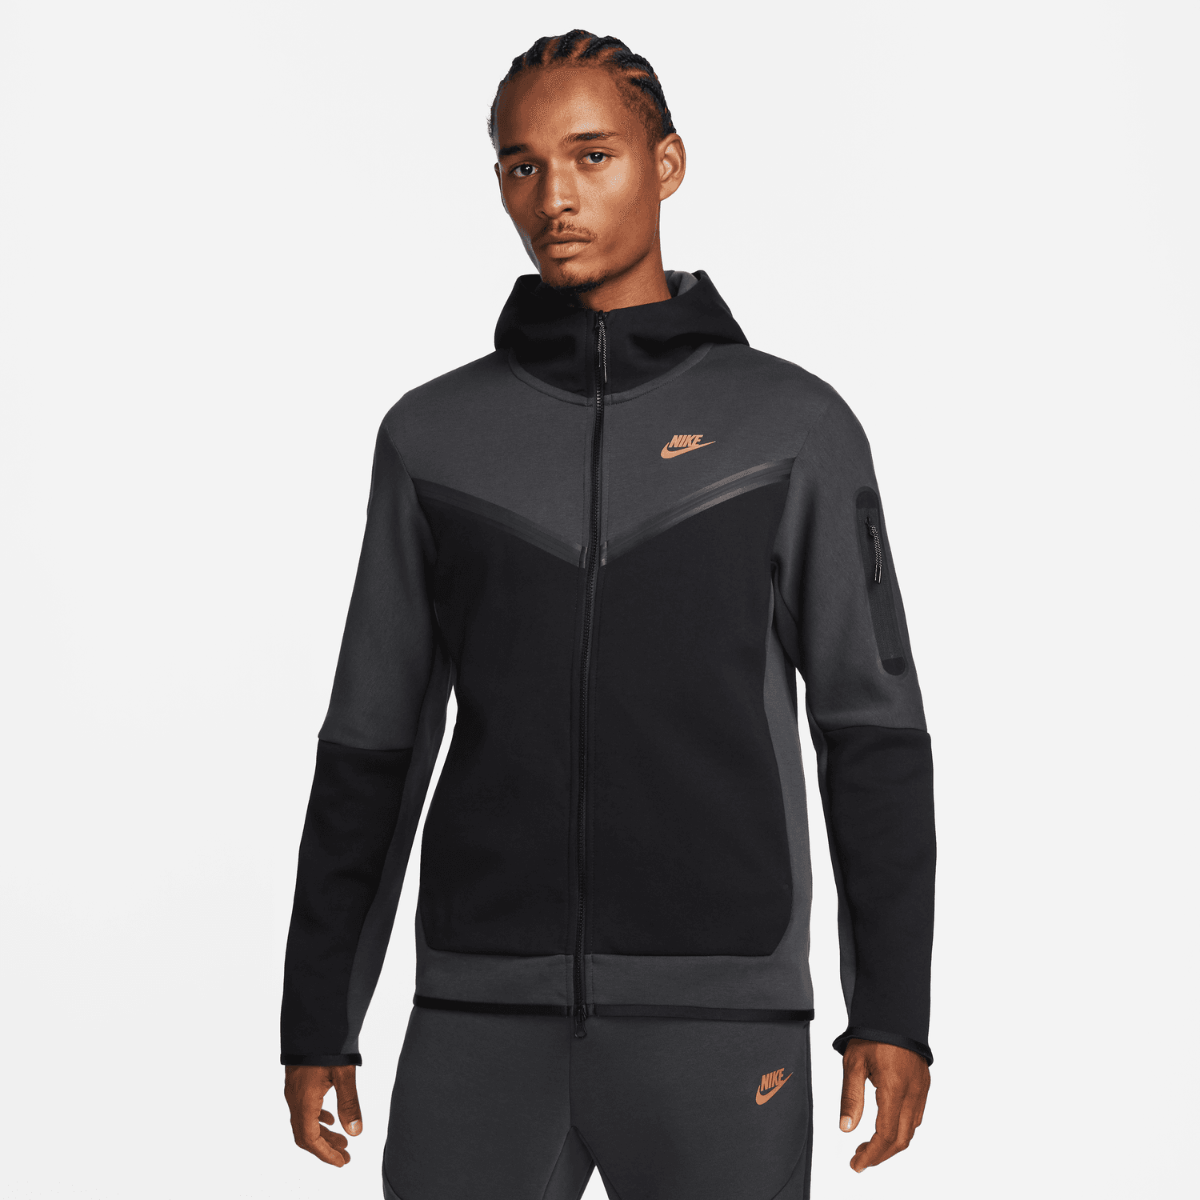 Felpa con cappuccio Nike Tech Fleece - nera/grigia/oro